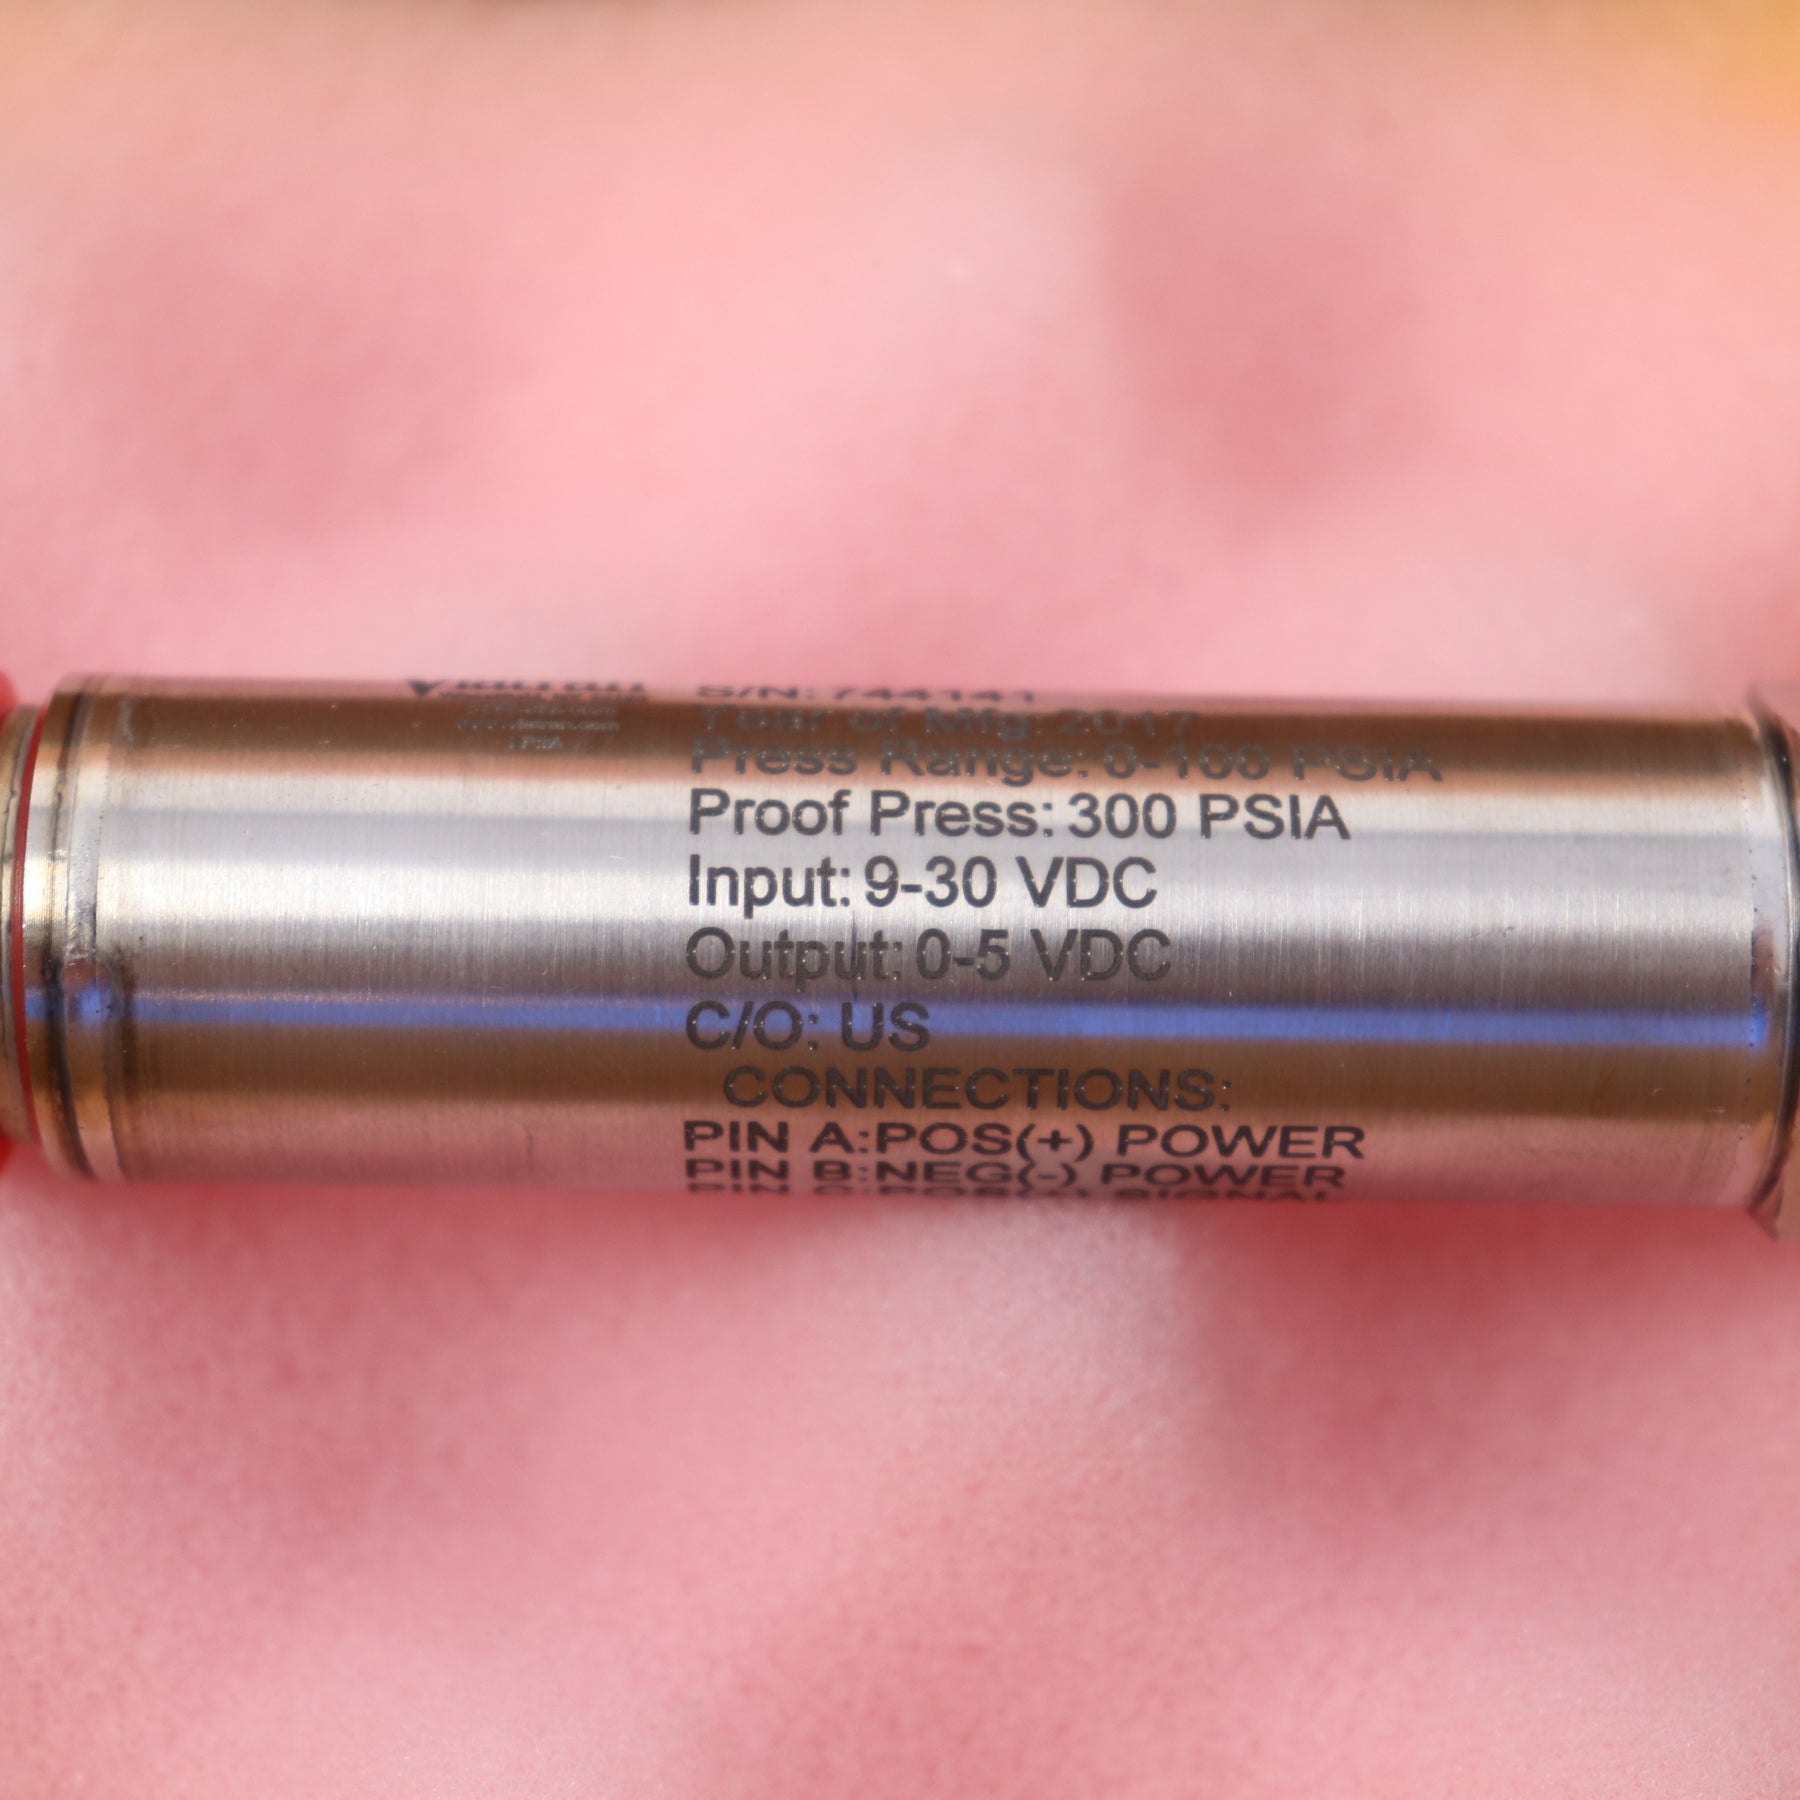 Viatran Compact Transducer 100PSIA Pressure Sensor Model 222AMAYC